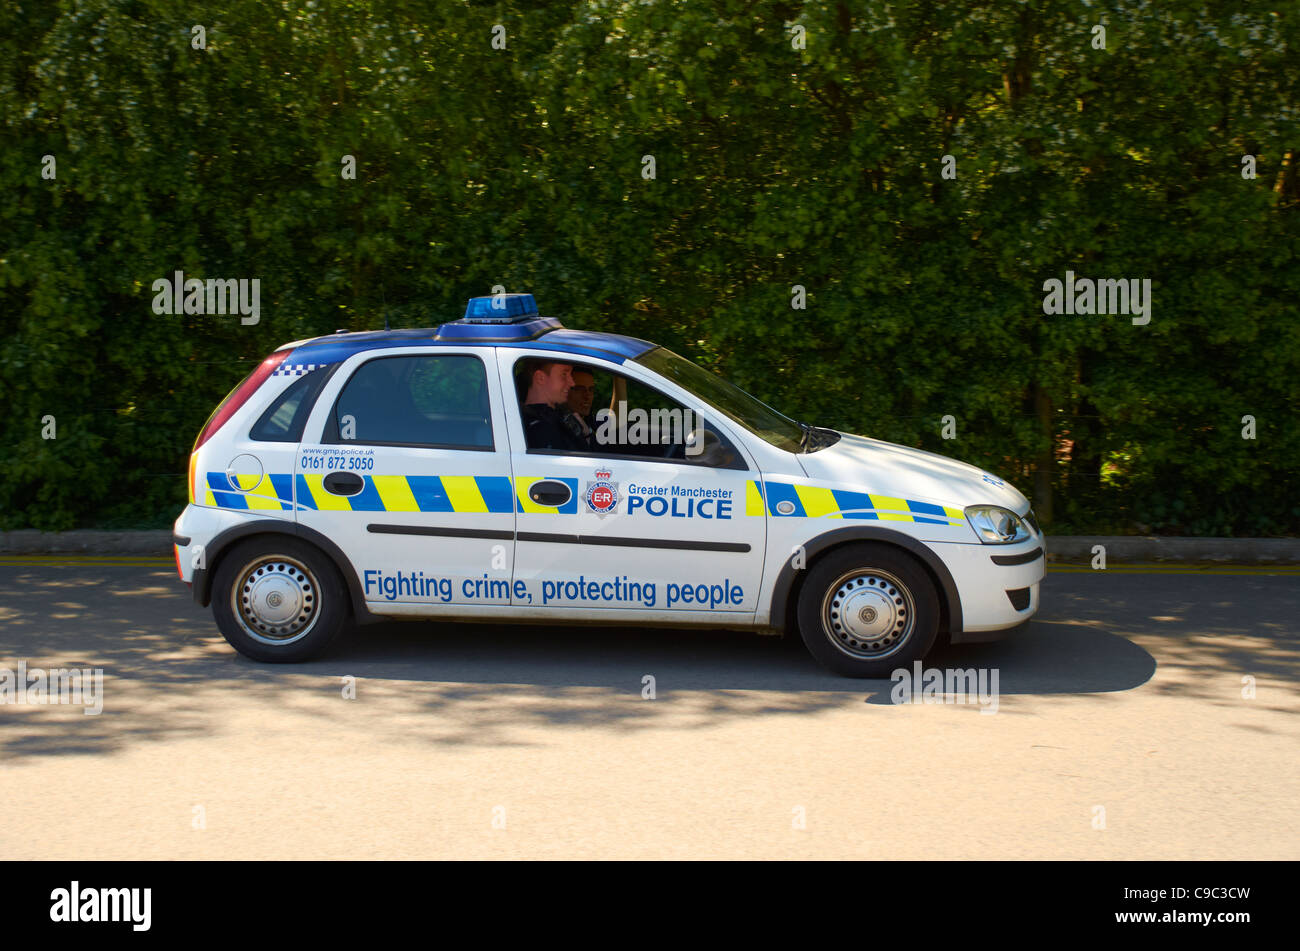 Police car in a car park Stock Photo